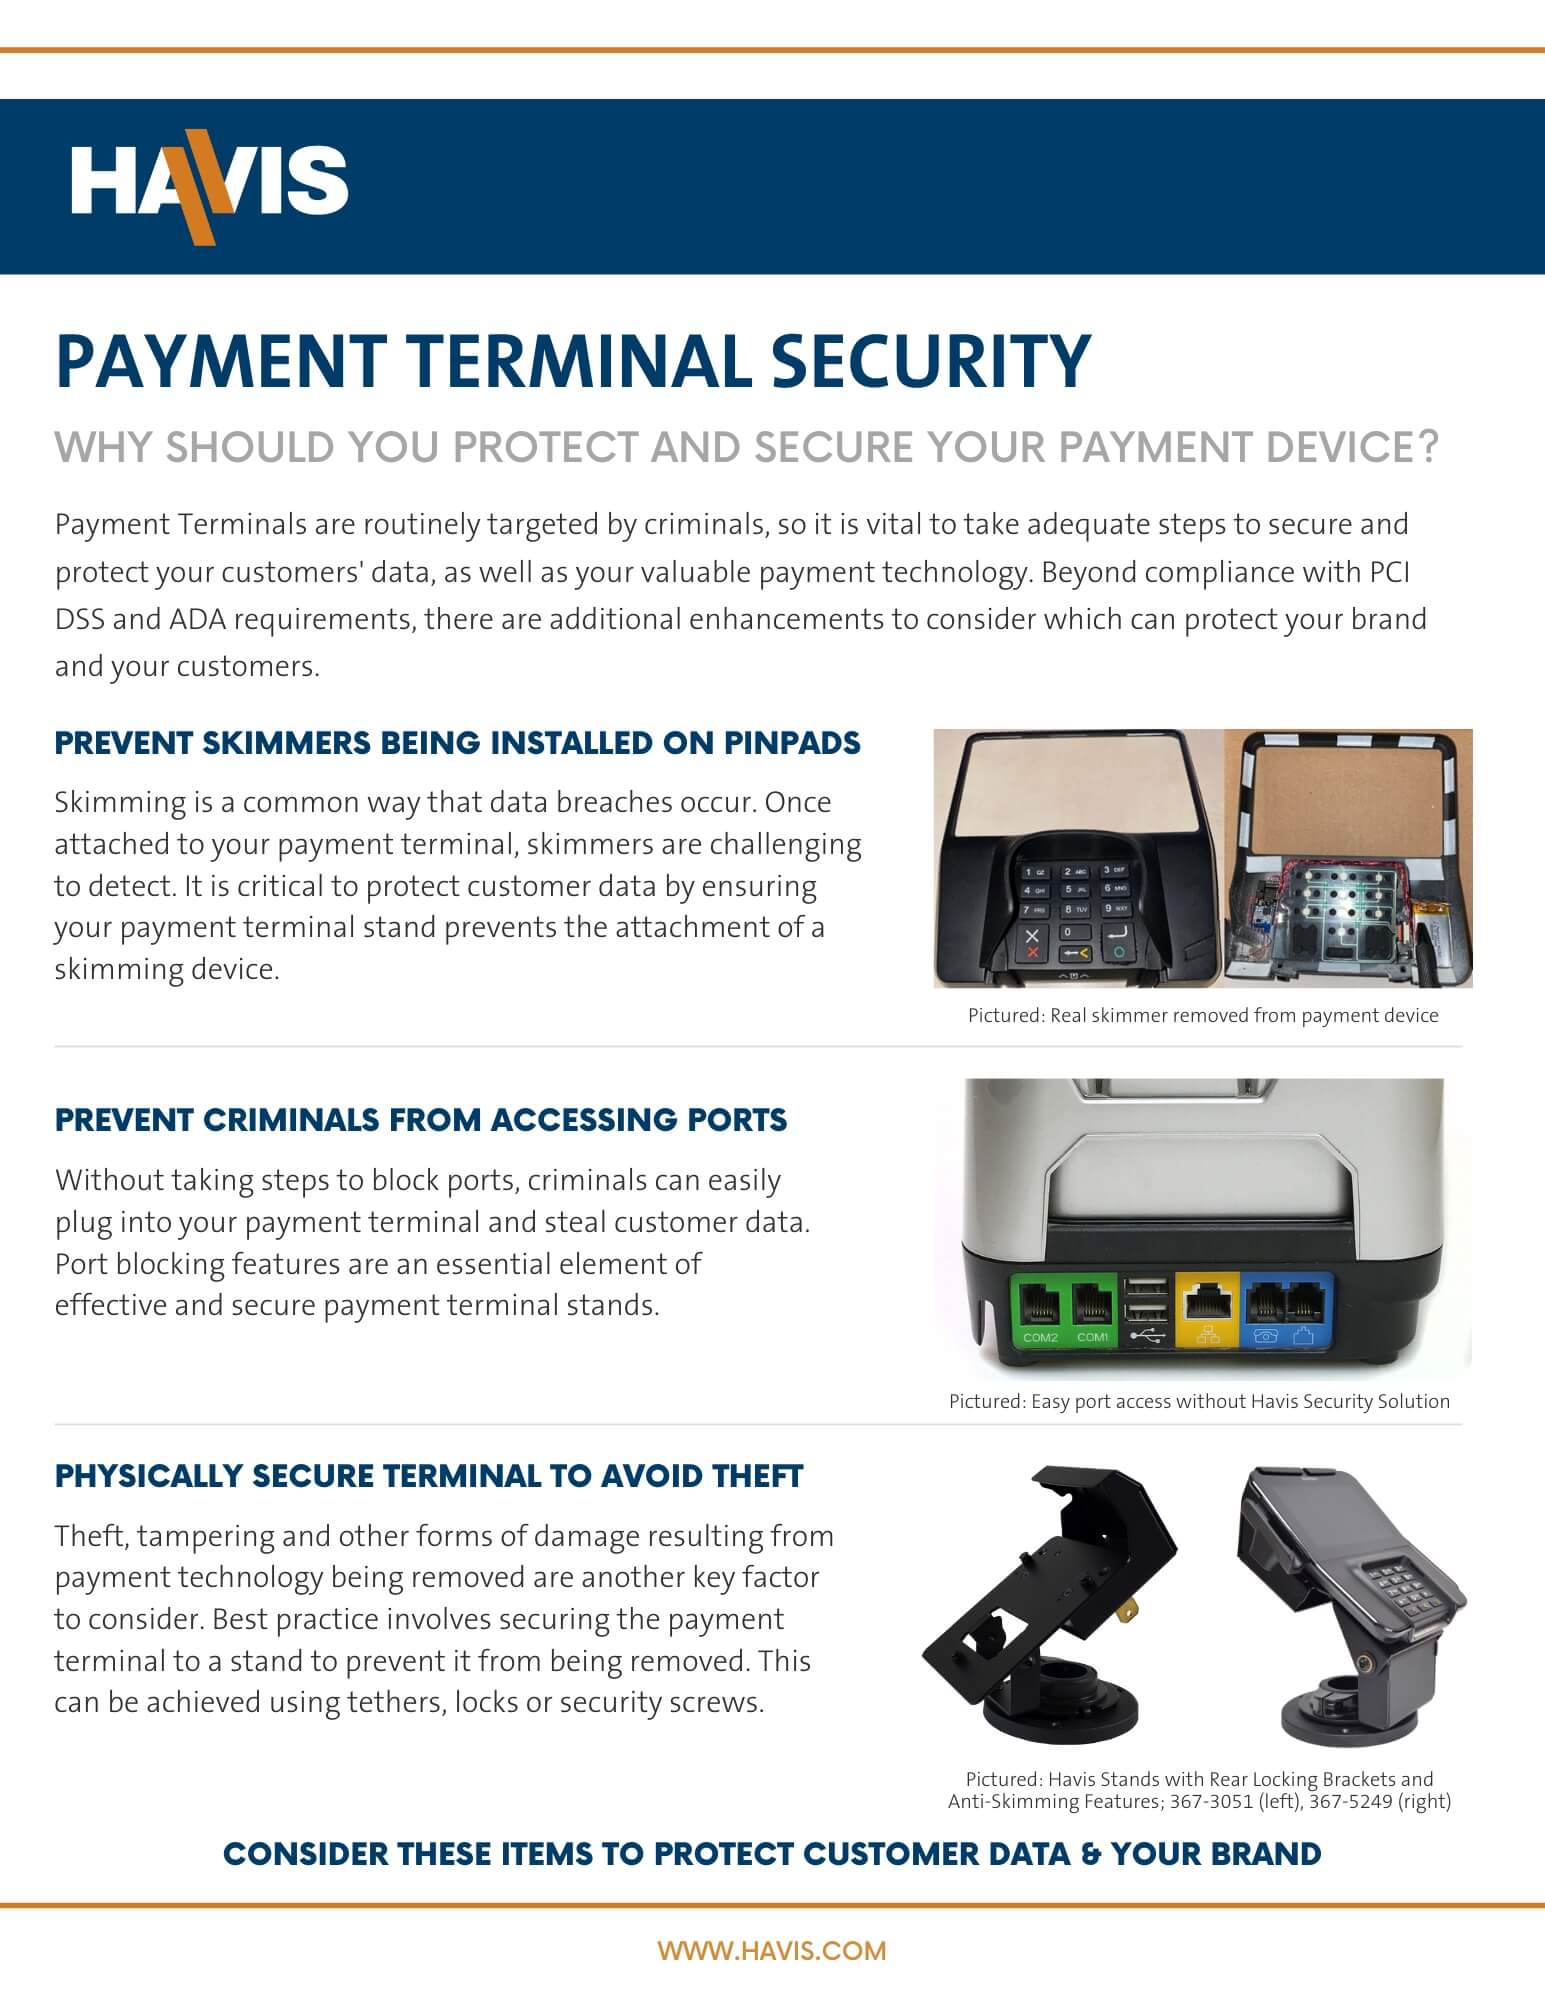 Payment Terminal Security – Information Sheet